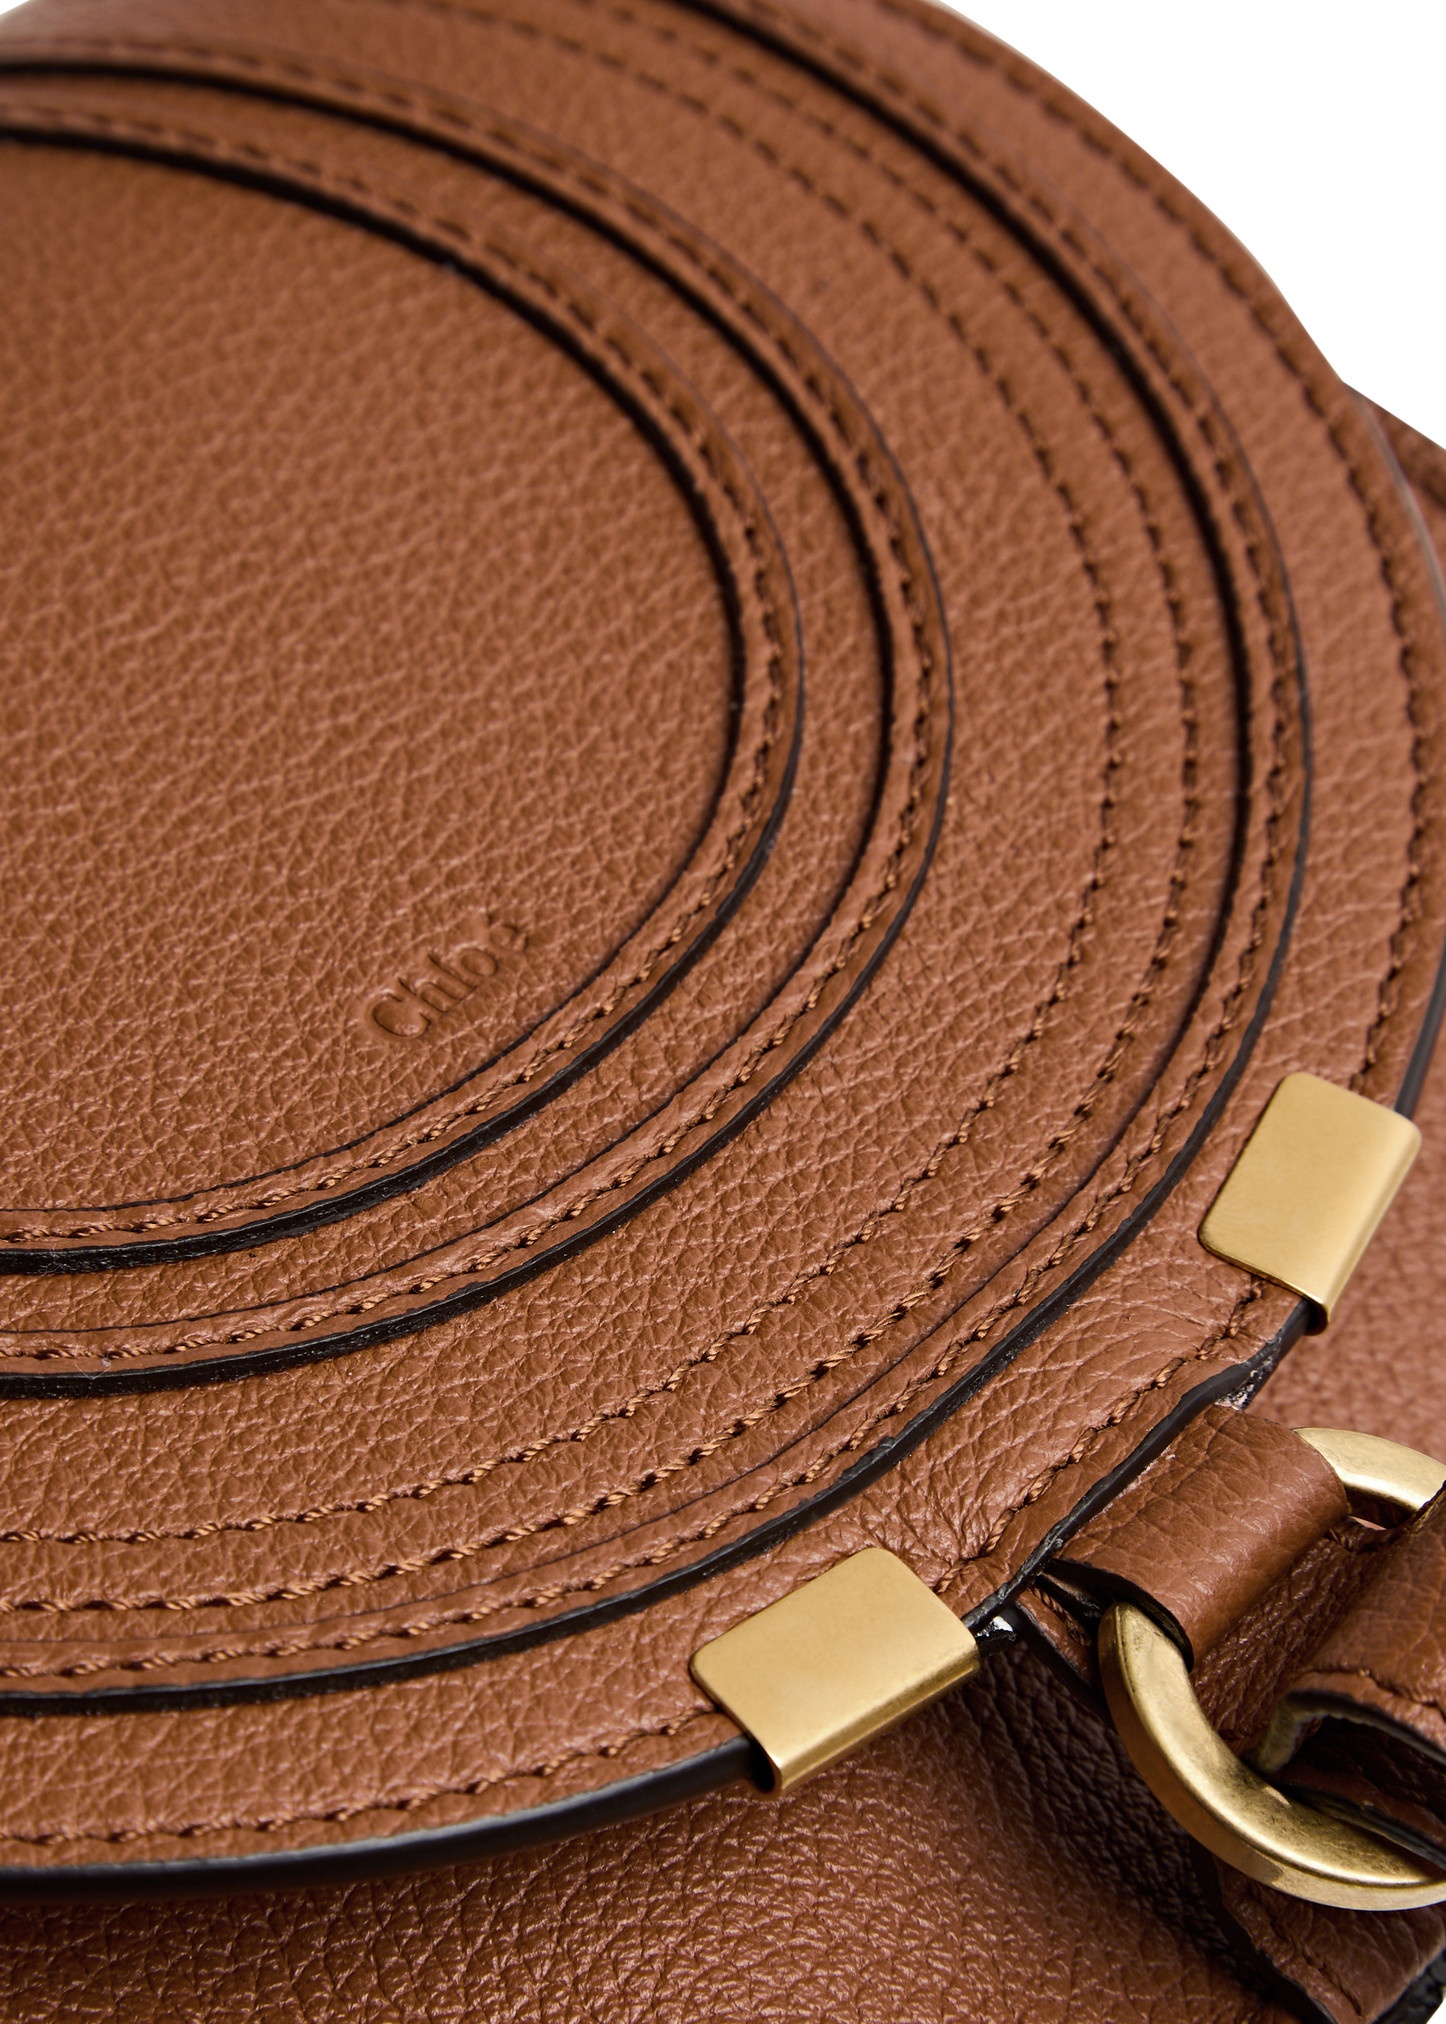 Marcie small leather saddle bag - 3